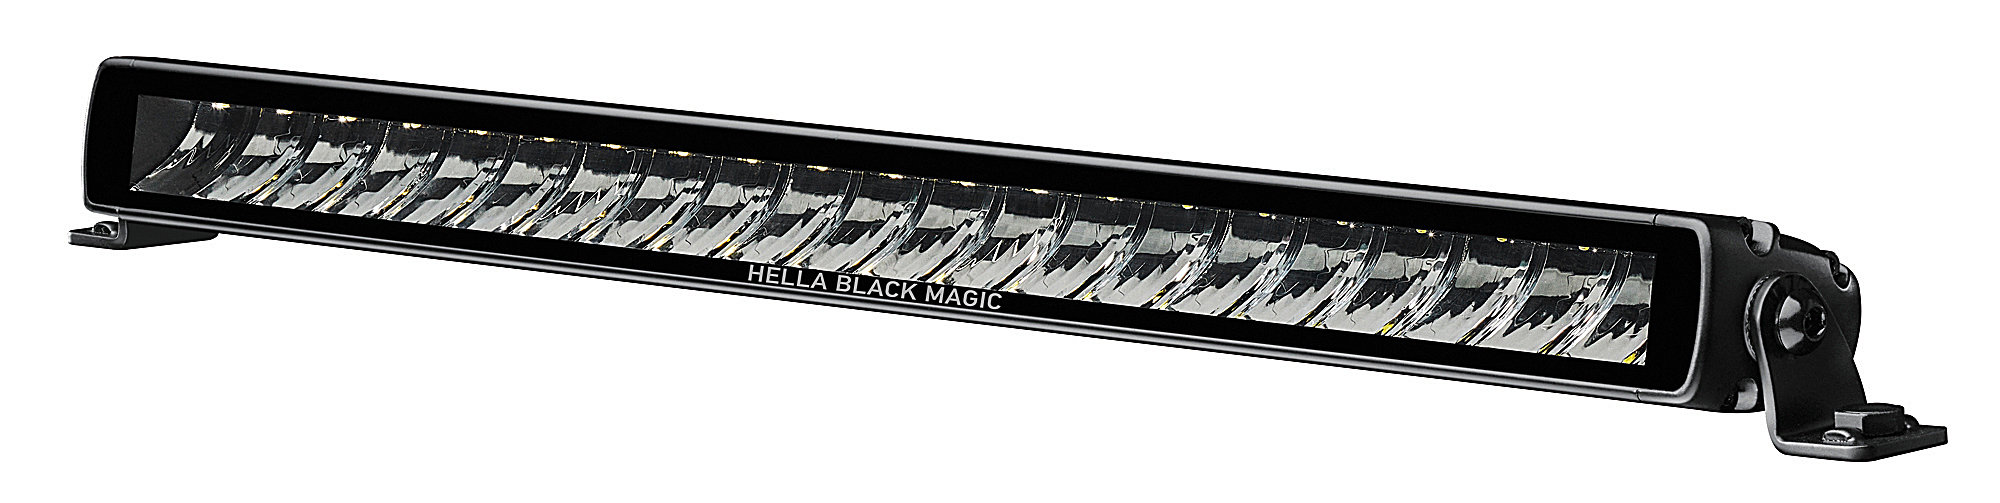 Hella Black Magic LED Light Bar